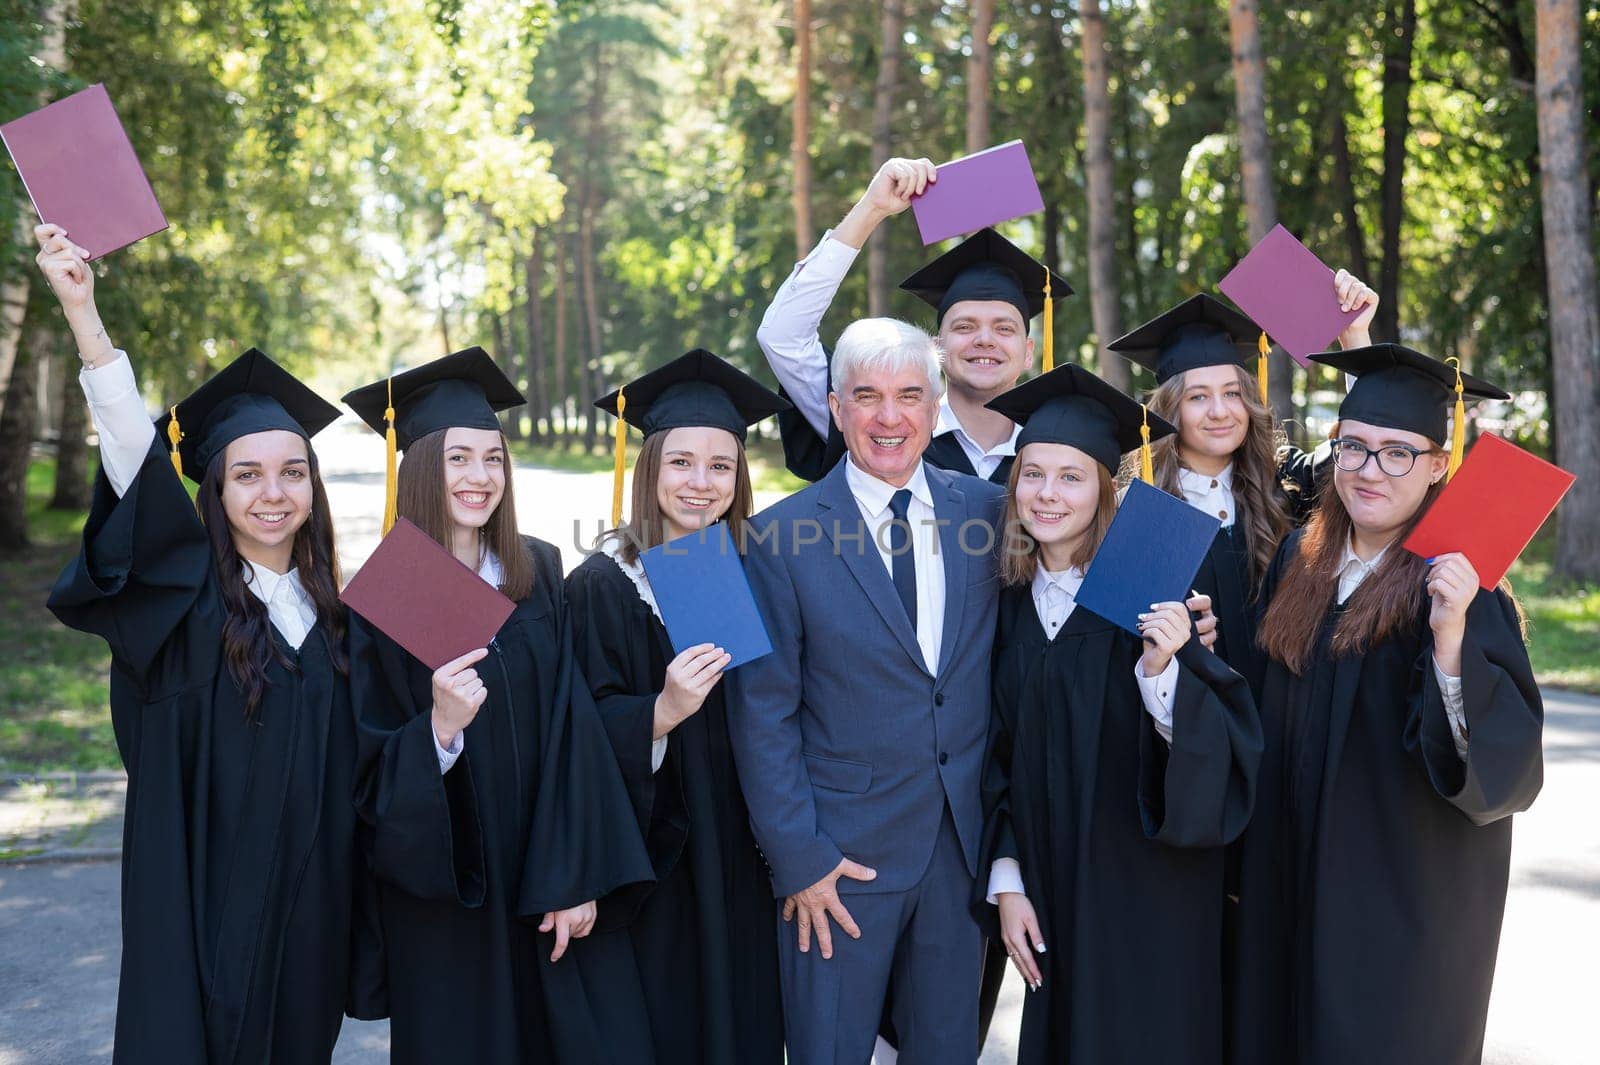 University professor and seven graduates rejoice at graduation. by mrwed54